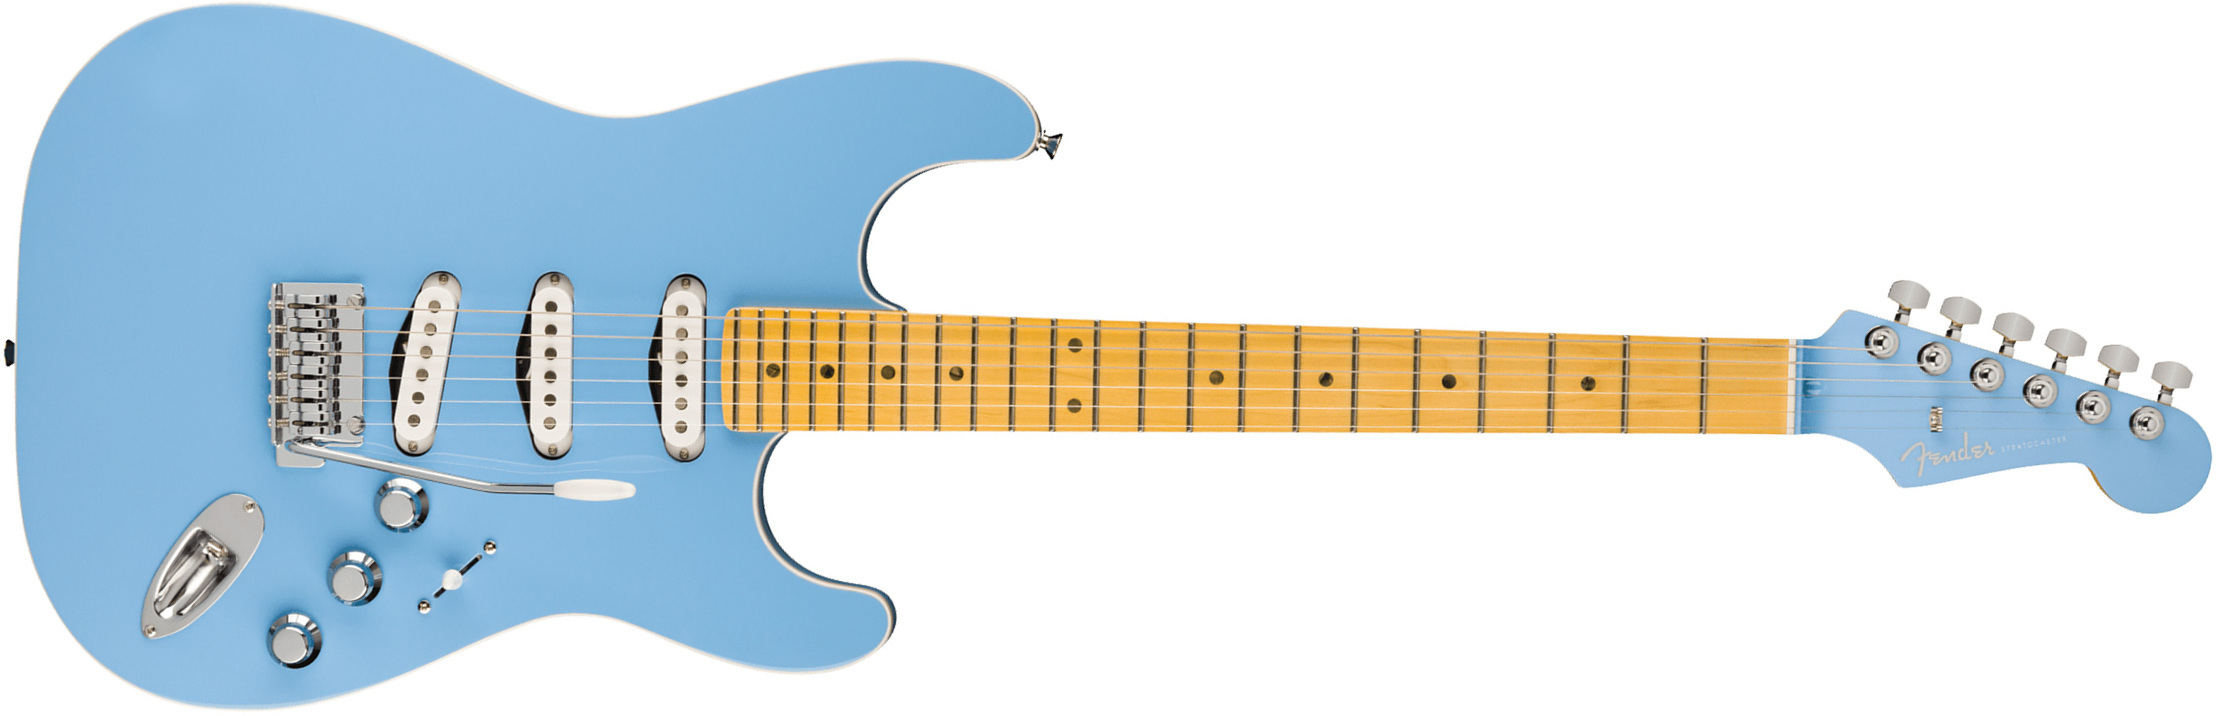 Fender Strat Aerodyne Special Jap 3s Trem Mn - California Blue - E-Gitarre in Str-Form - Main picture